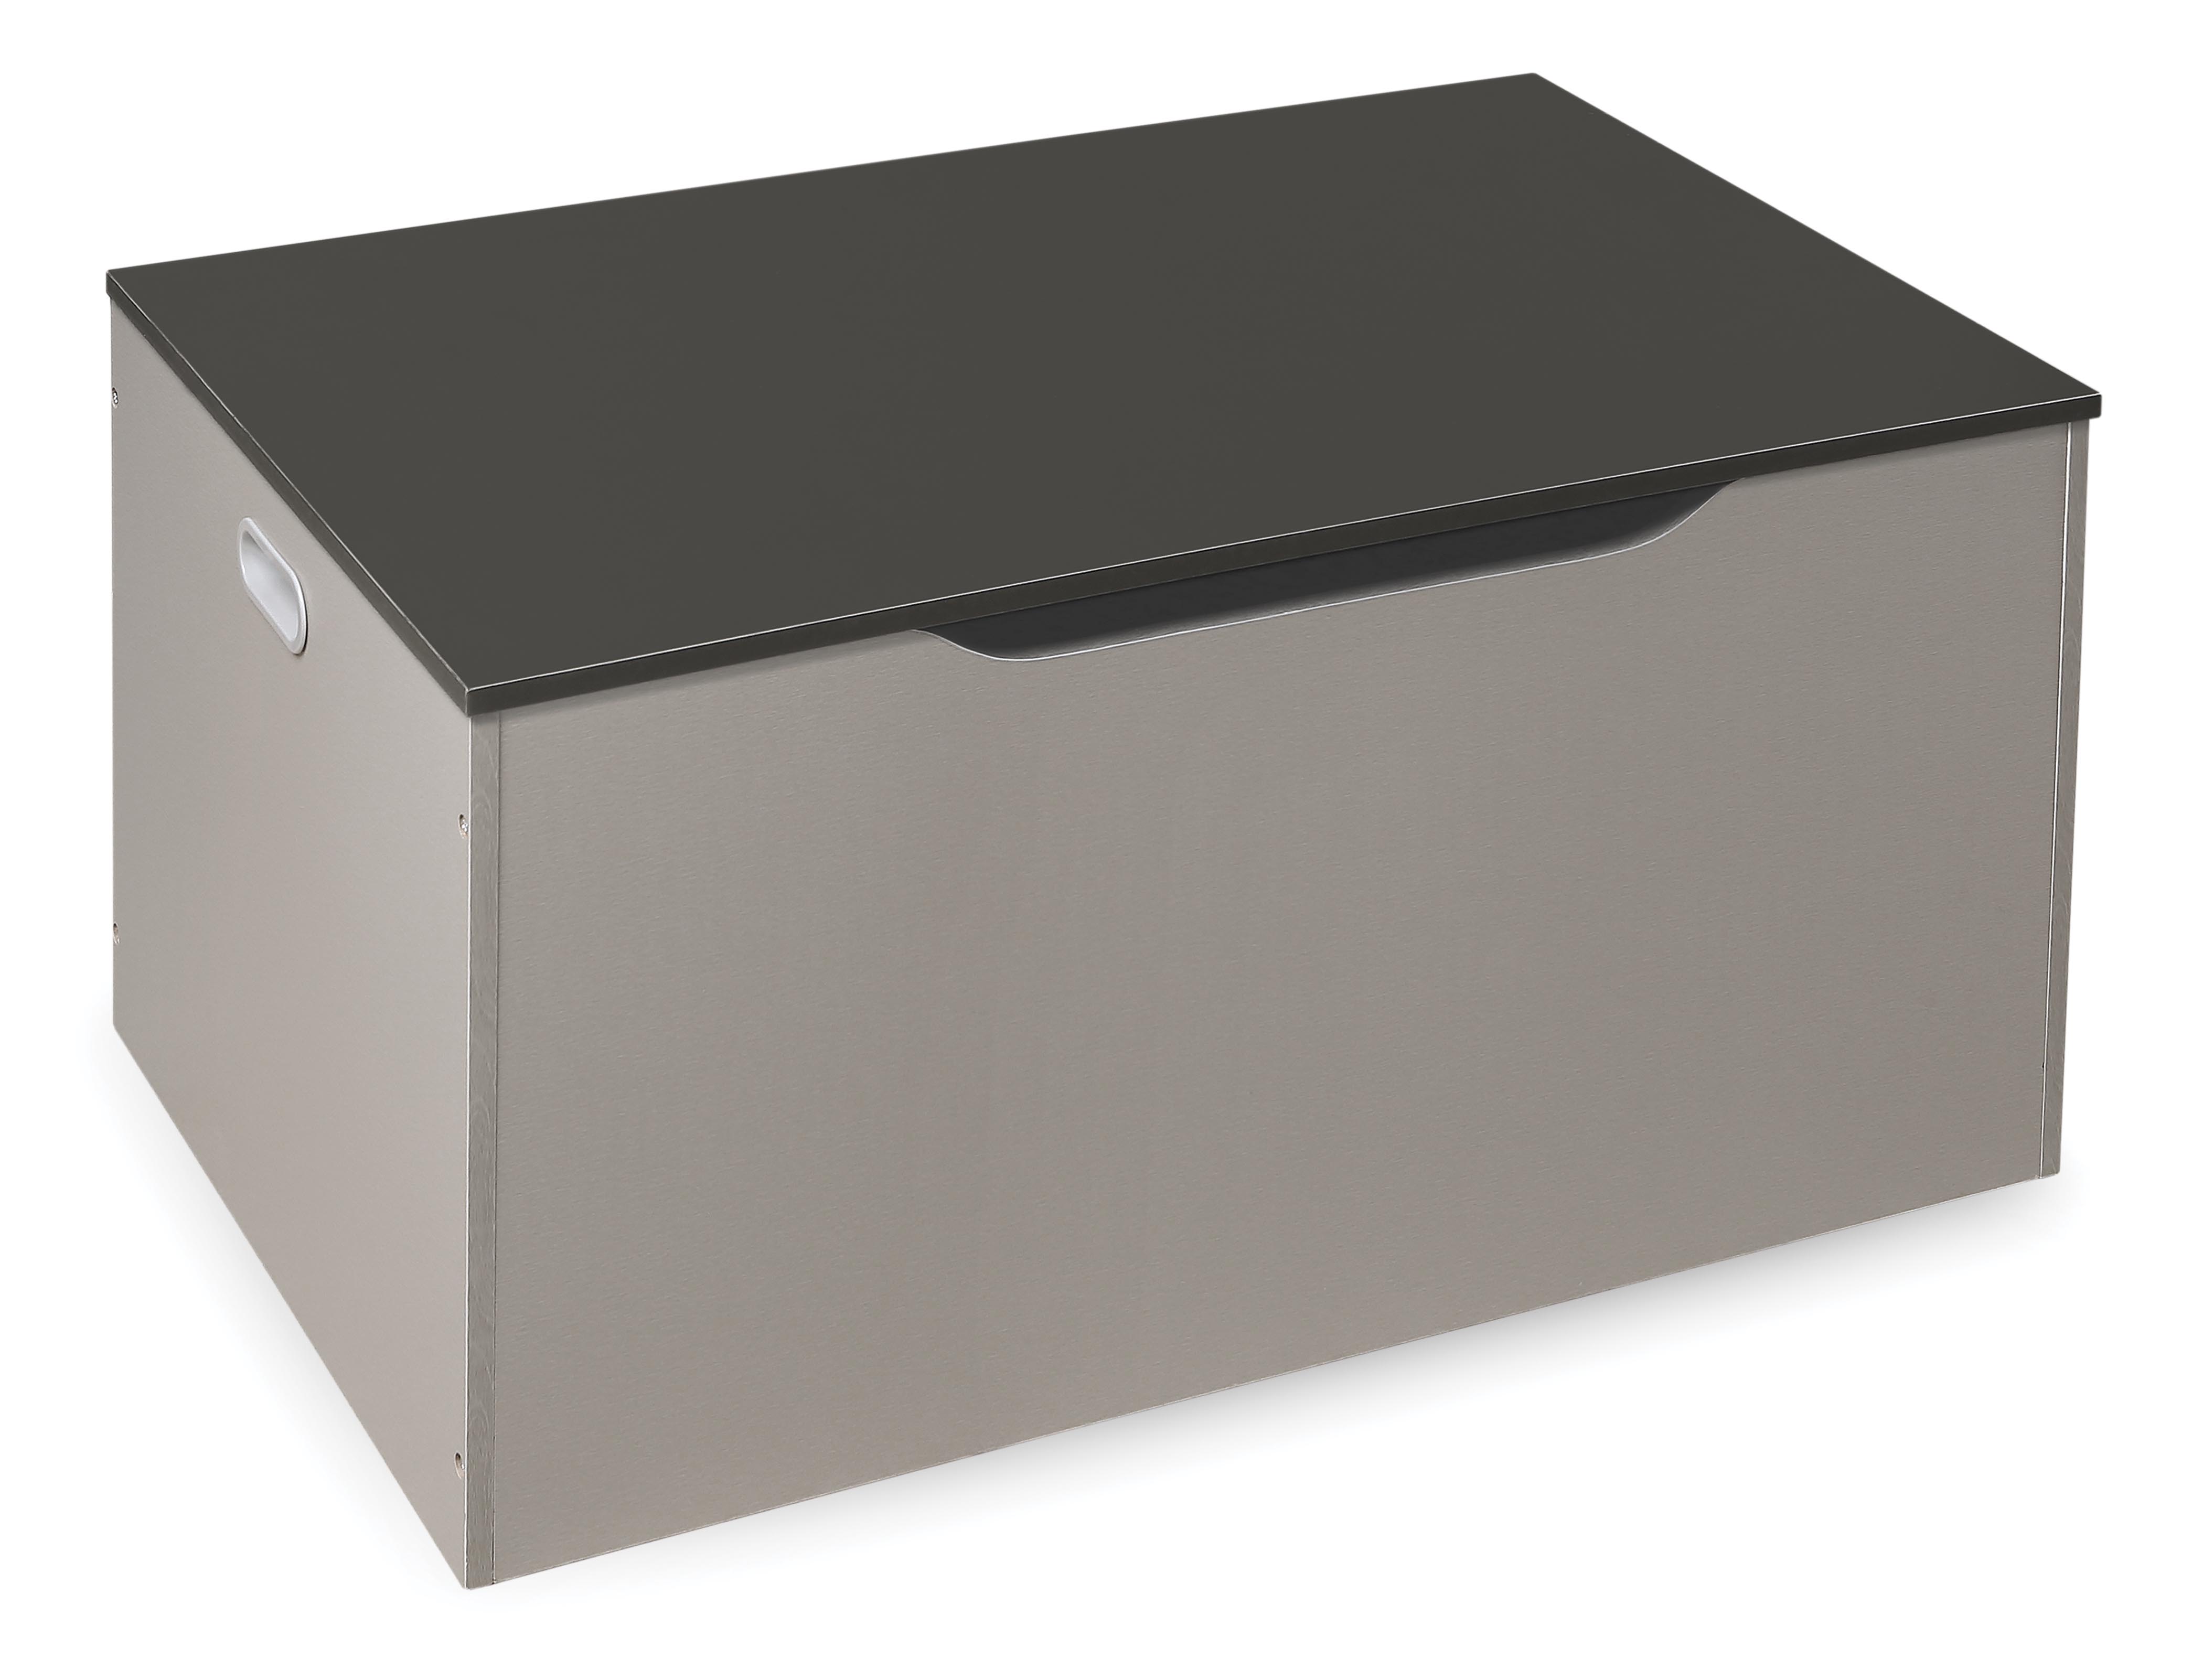 Flat Bench Top Toy and Storage Box - Woodgrain/Gray